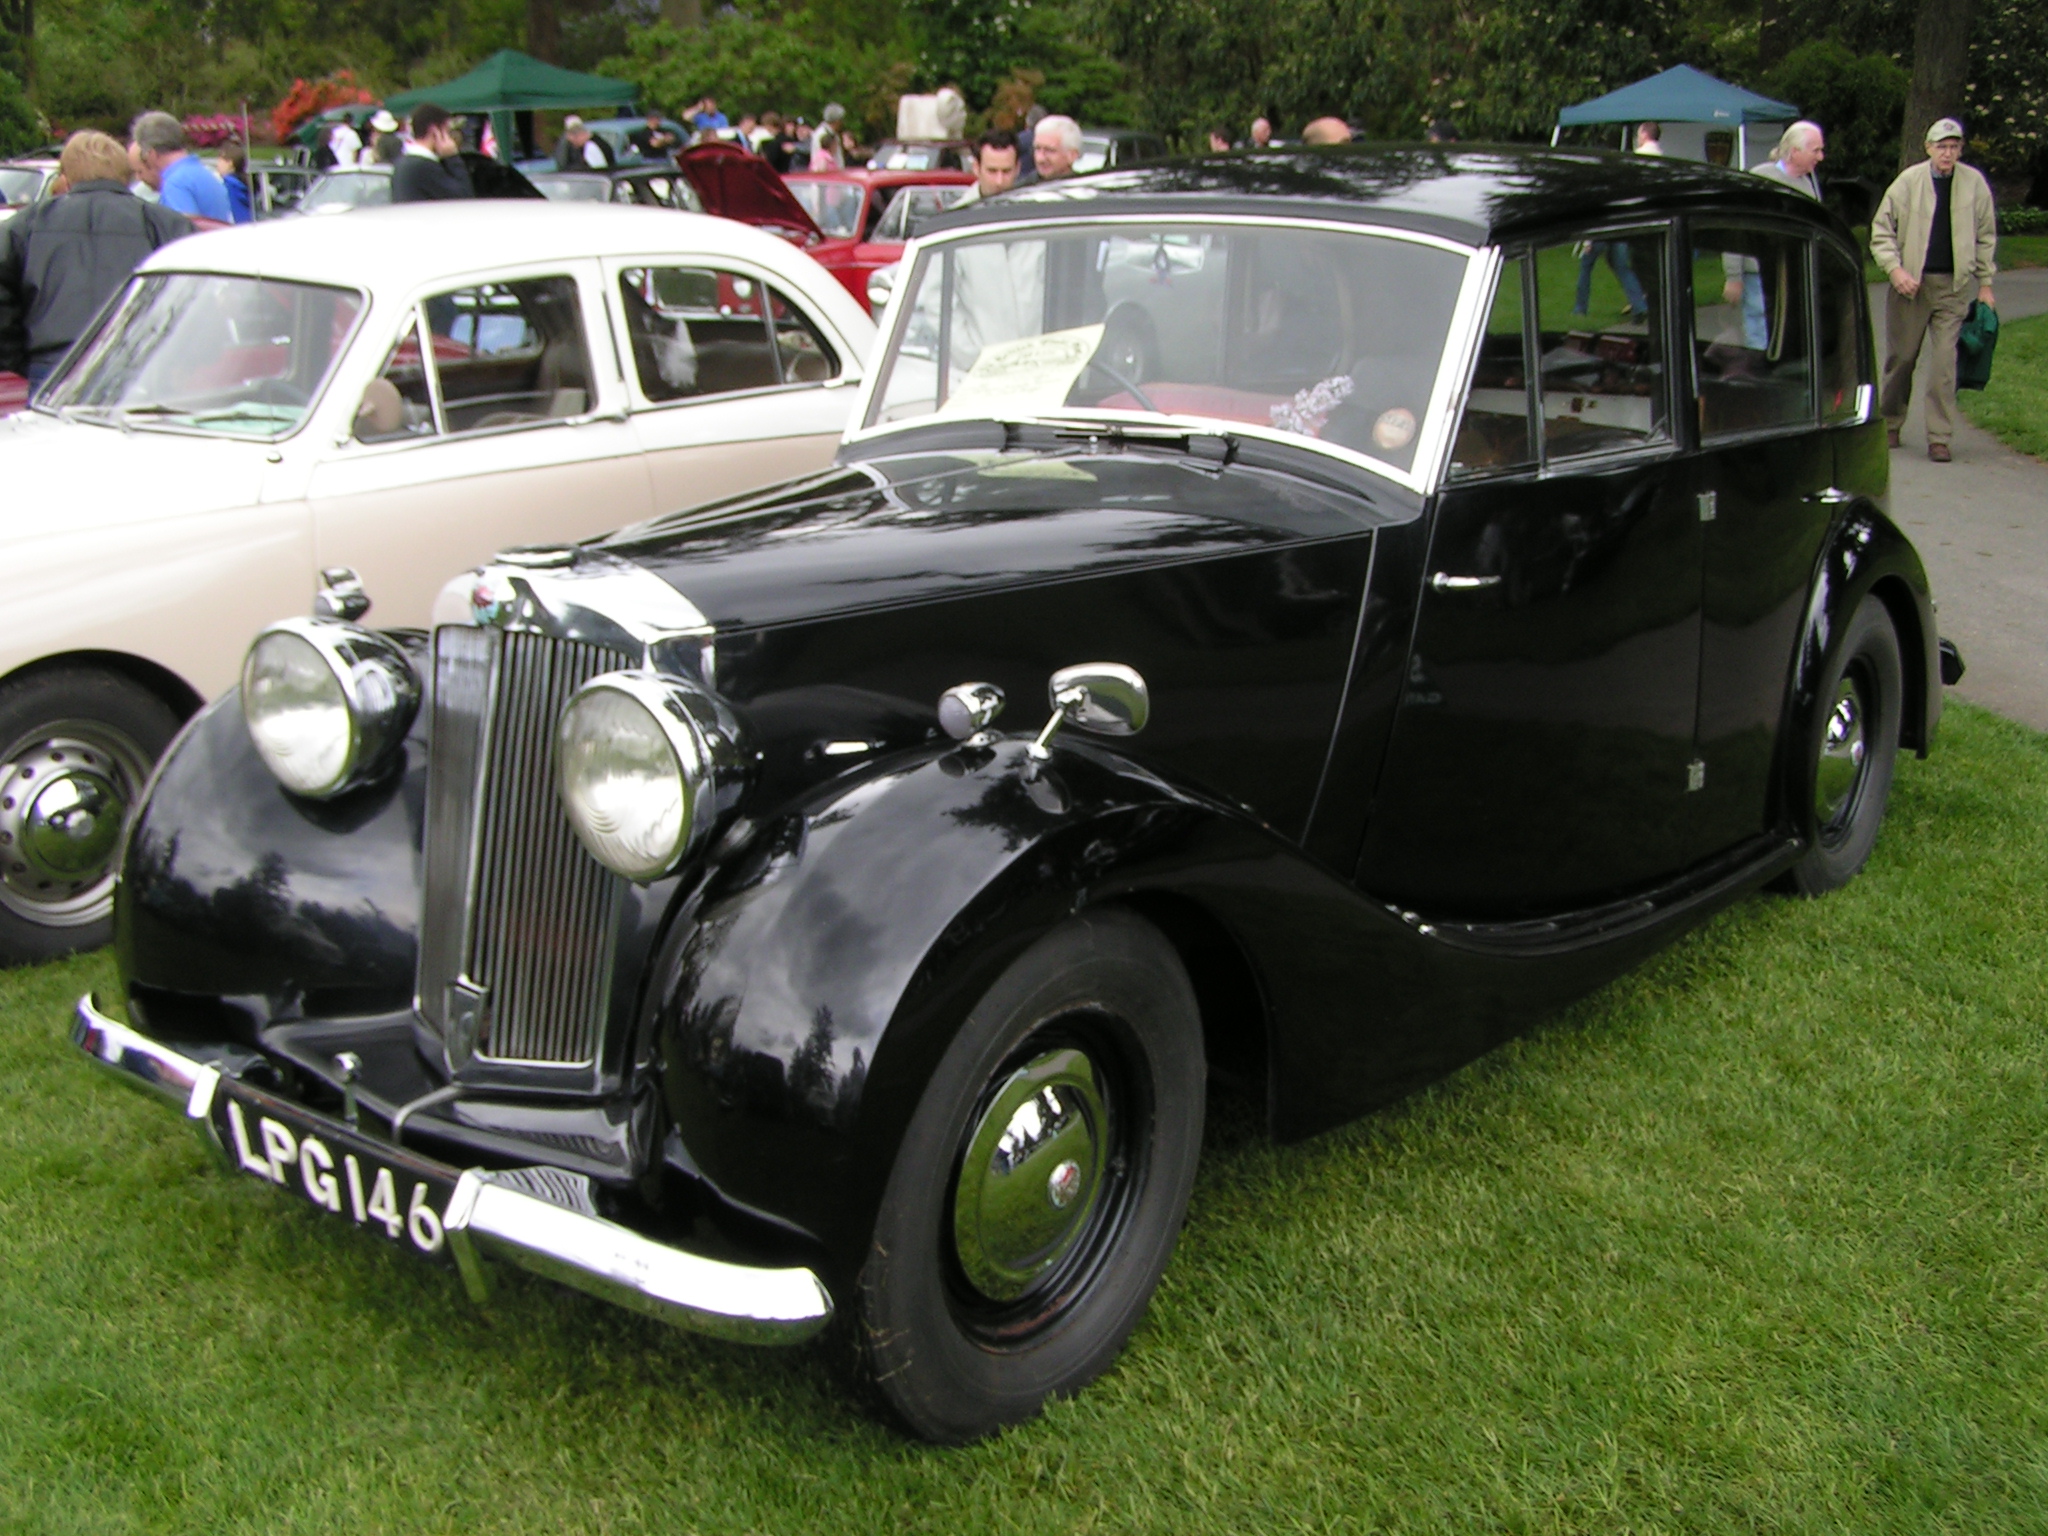 File:1947 Triumph Renown.jpg - Wikimedia Commons